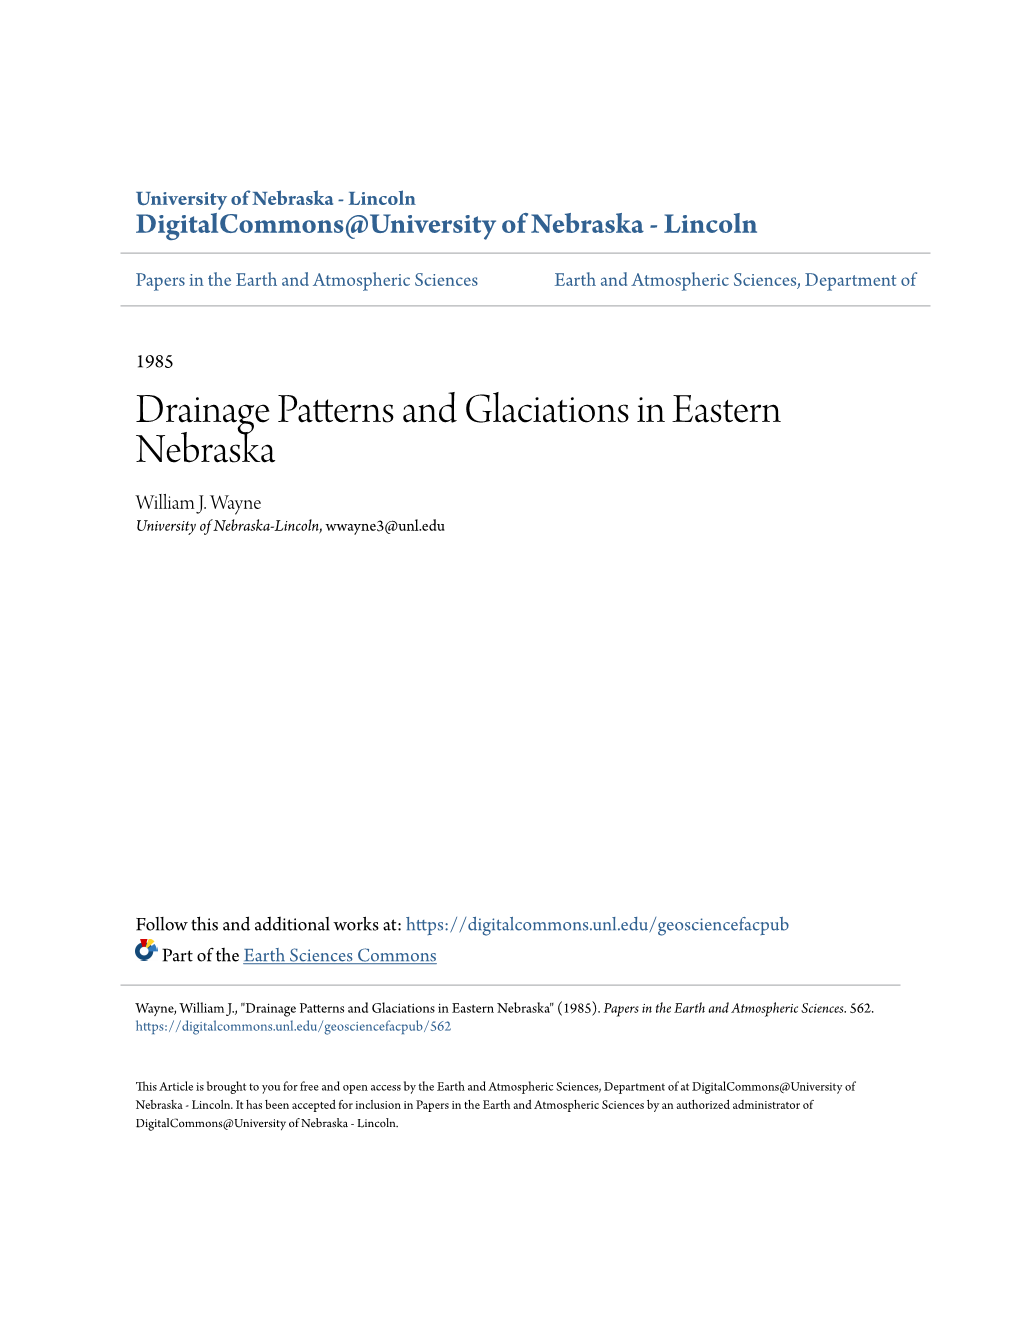 Drainage Patterns and Glaciations in Eastern Nebraska William J